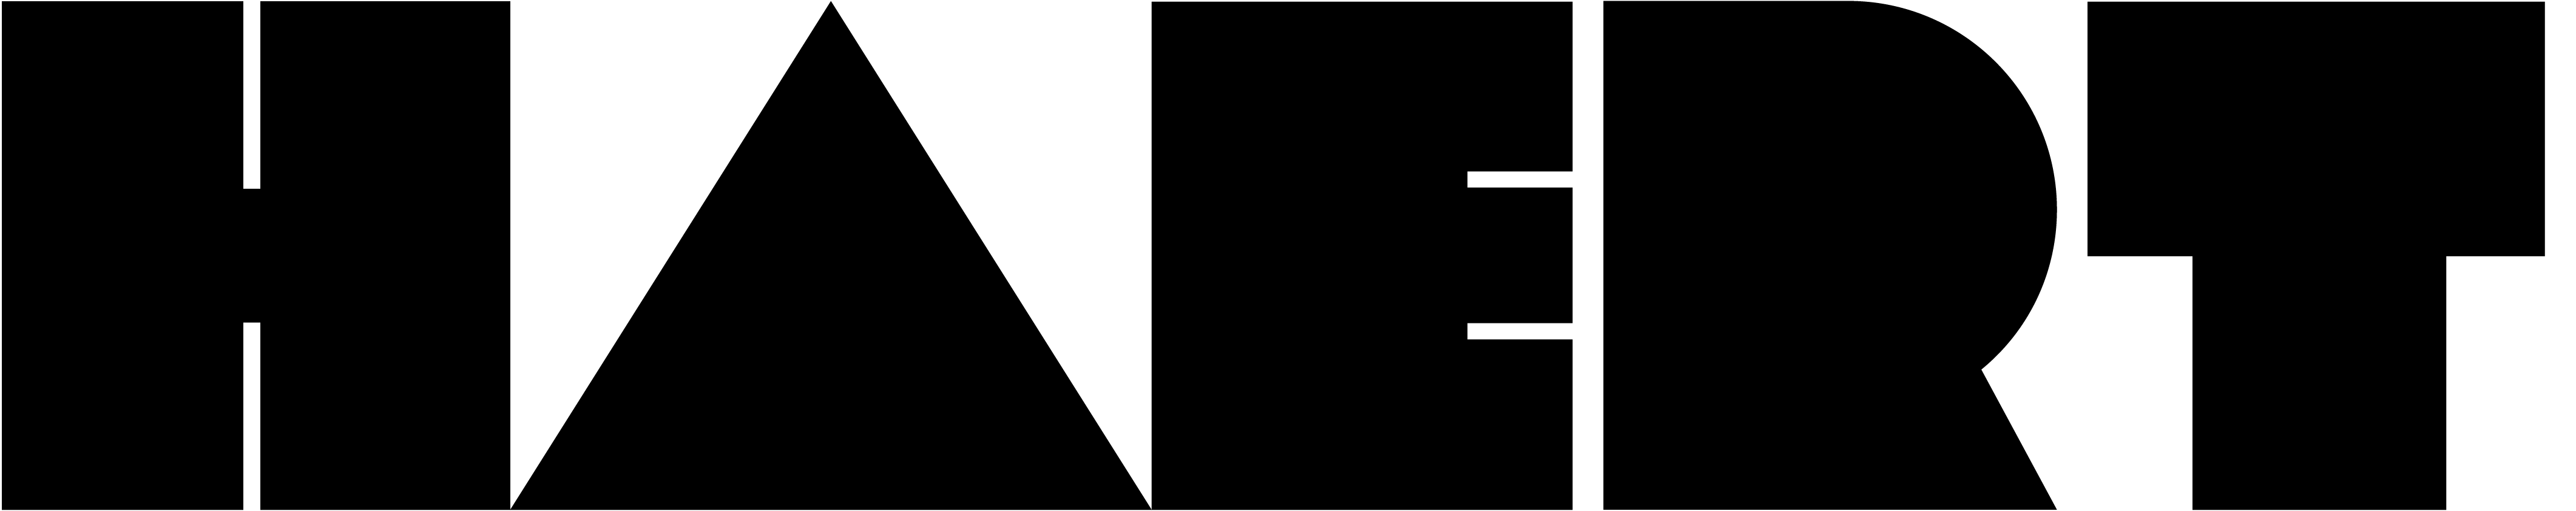 Logo haert pour animation